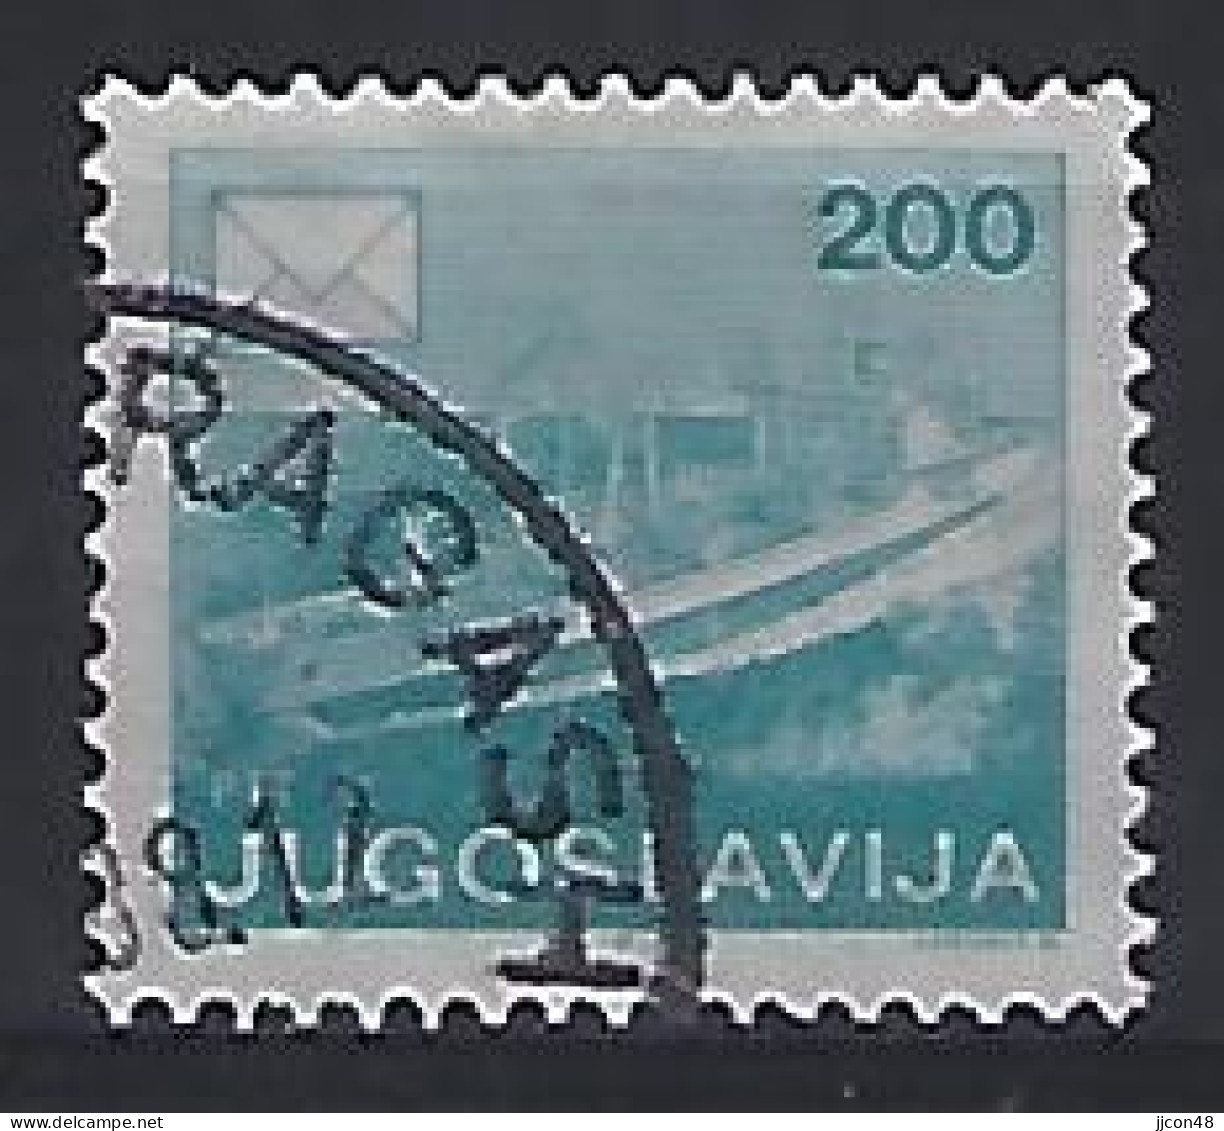 Jugoslavia 1986  Postdienst (o) Mi.2176 A - Usados